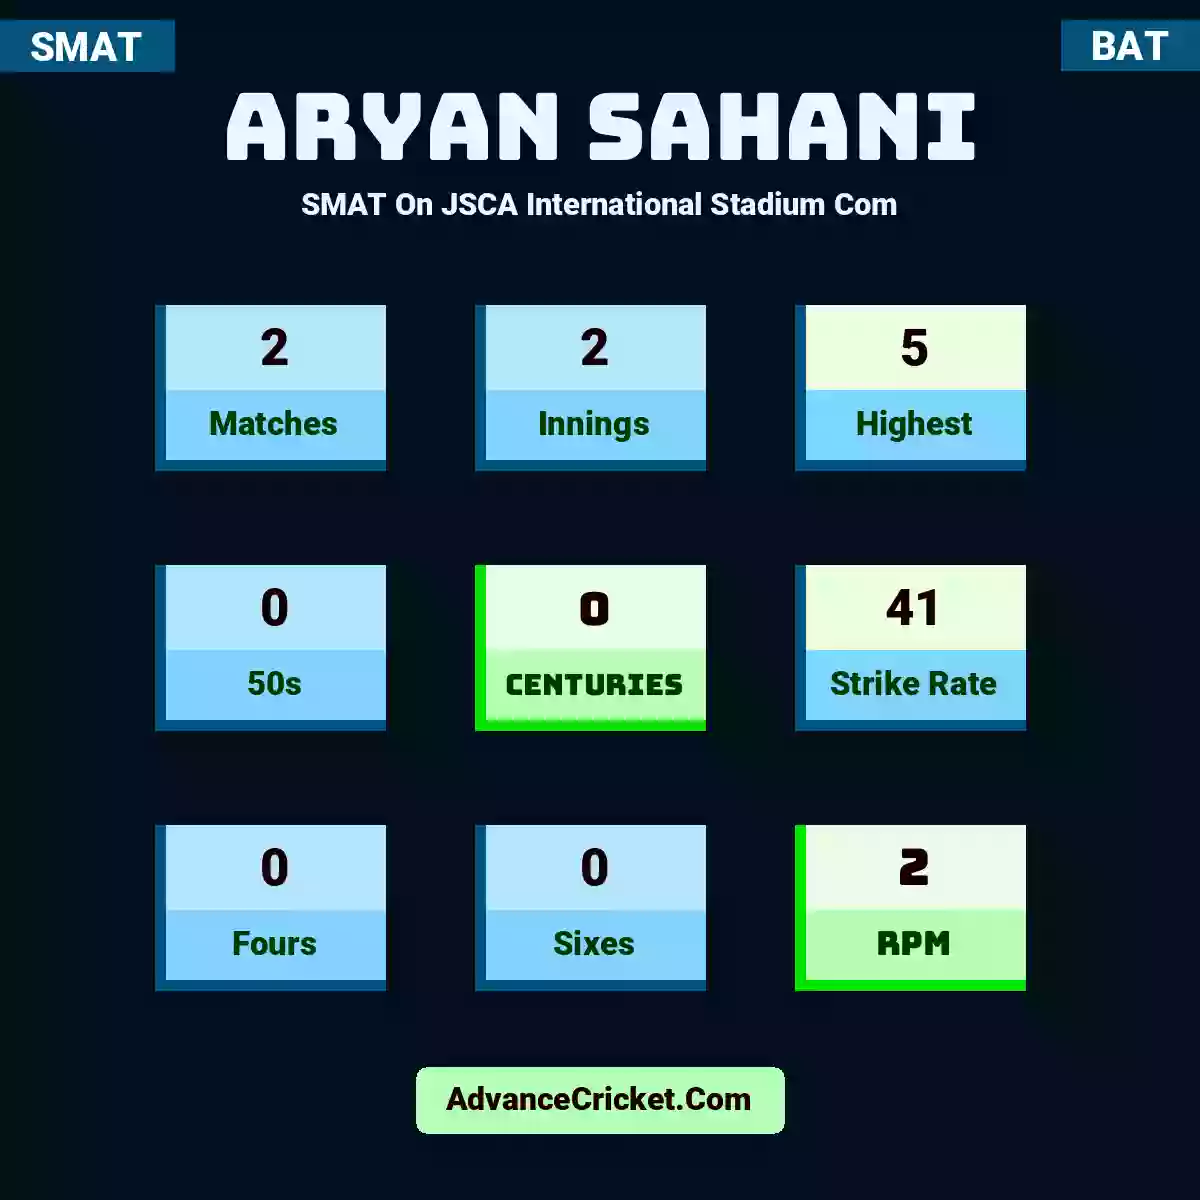 Aryan Sahani SMAT  On JSCA International Stadium Com, Aryan Sahani played 2 matches, scored 5 runs as highest, 0 half-centuries, and 0 centuries, with a strike rate of 41. A.Sahani hit 0 fours and 0 sixes, with an RPM of 2.